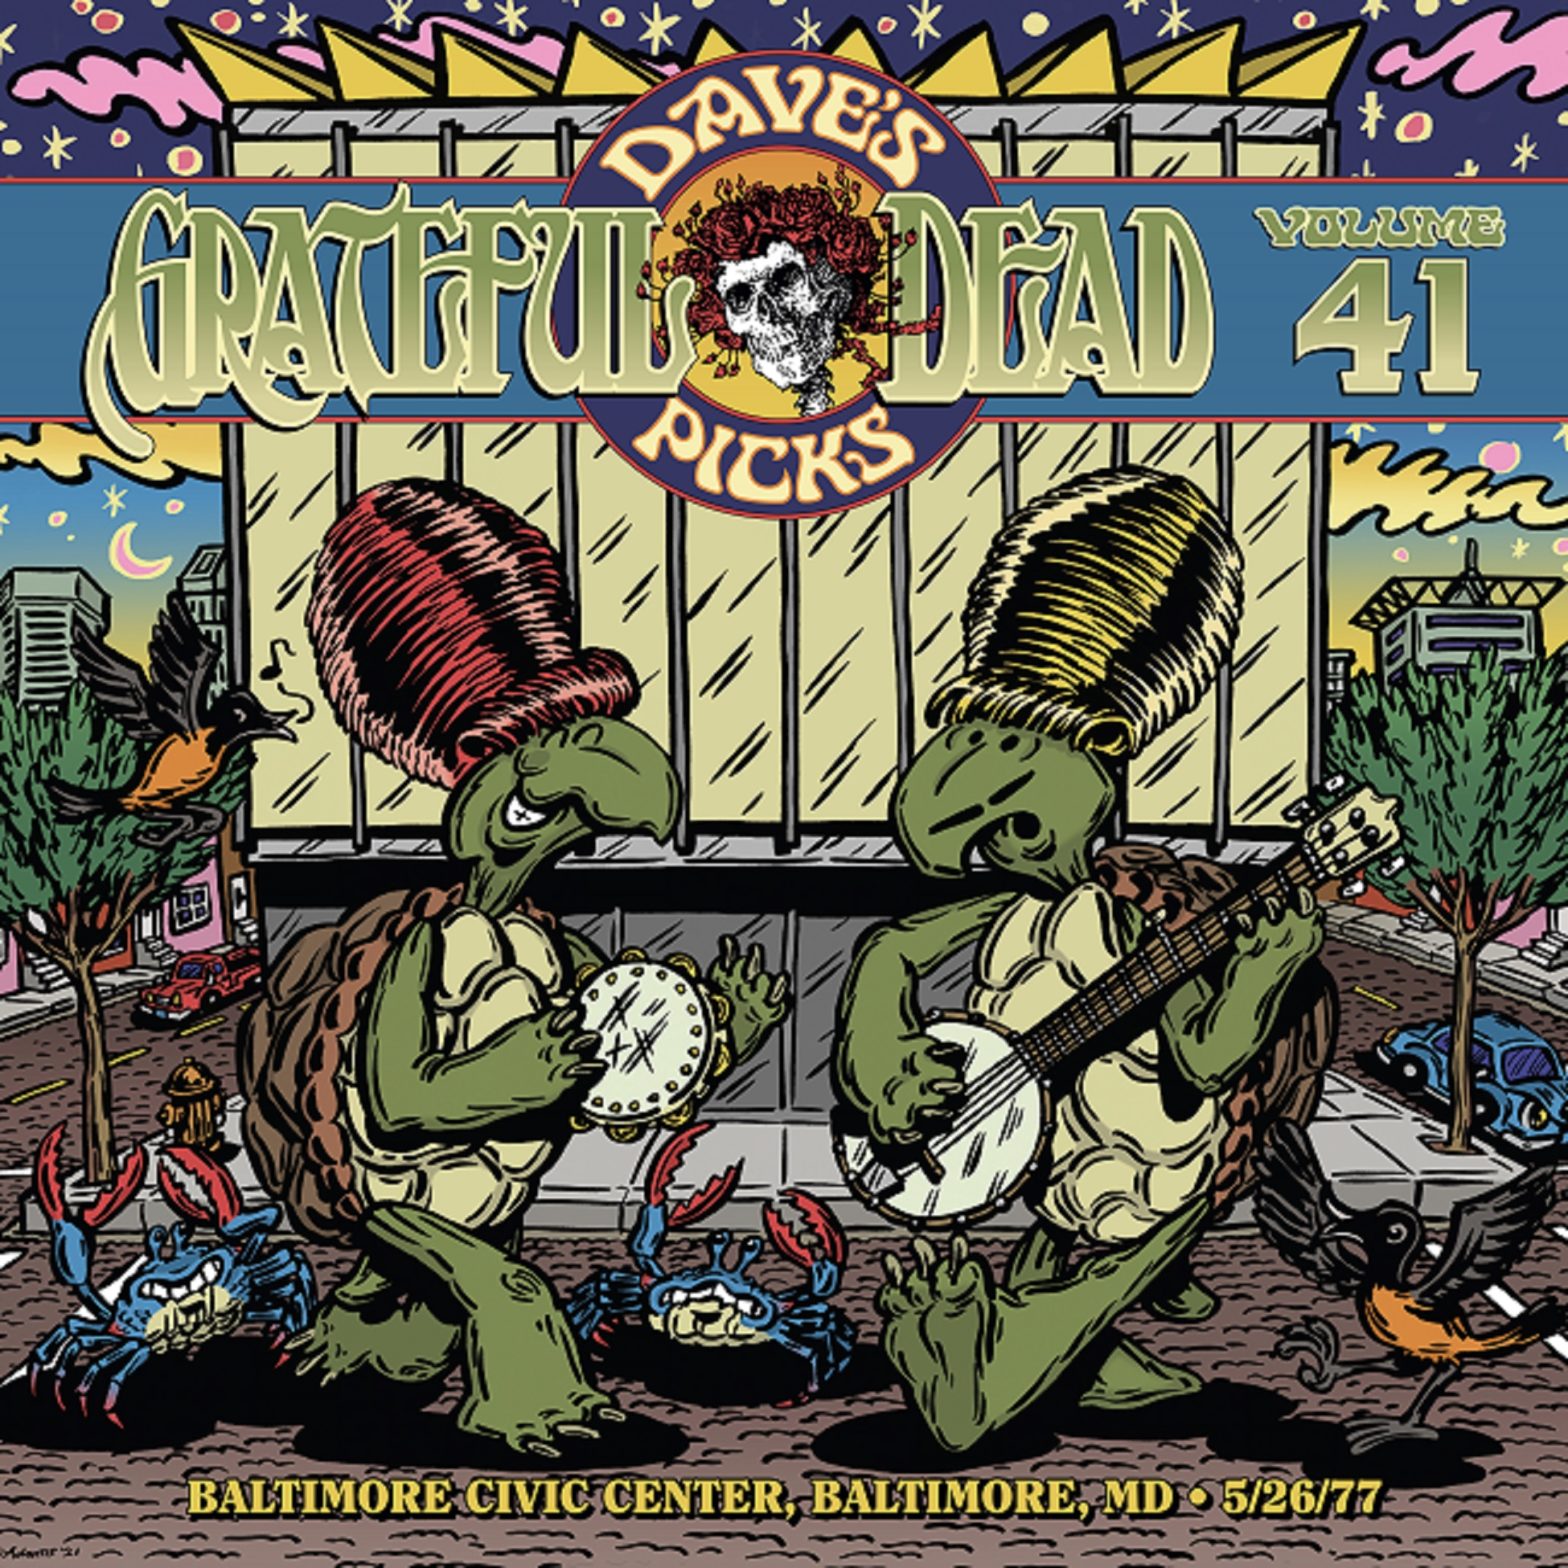 Grateful Dead - Dave's Picks Volume 41 (Cover)